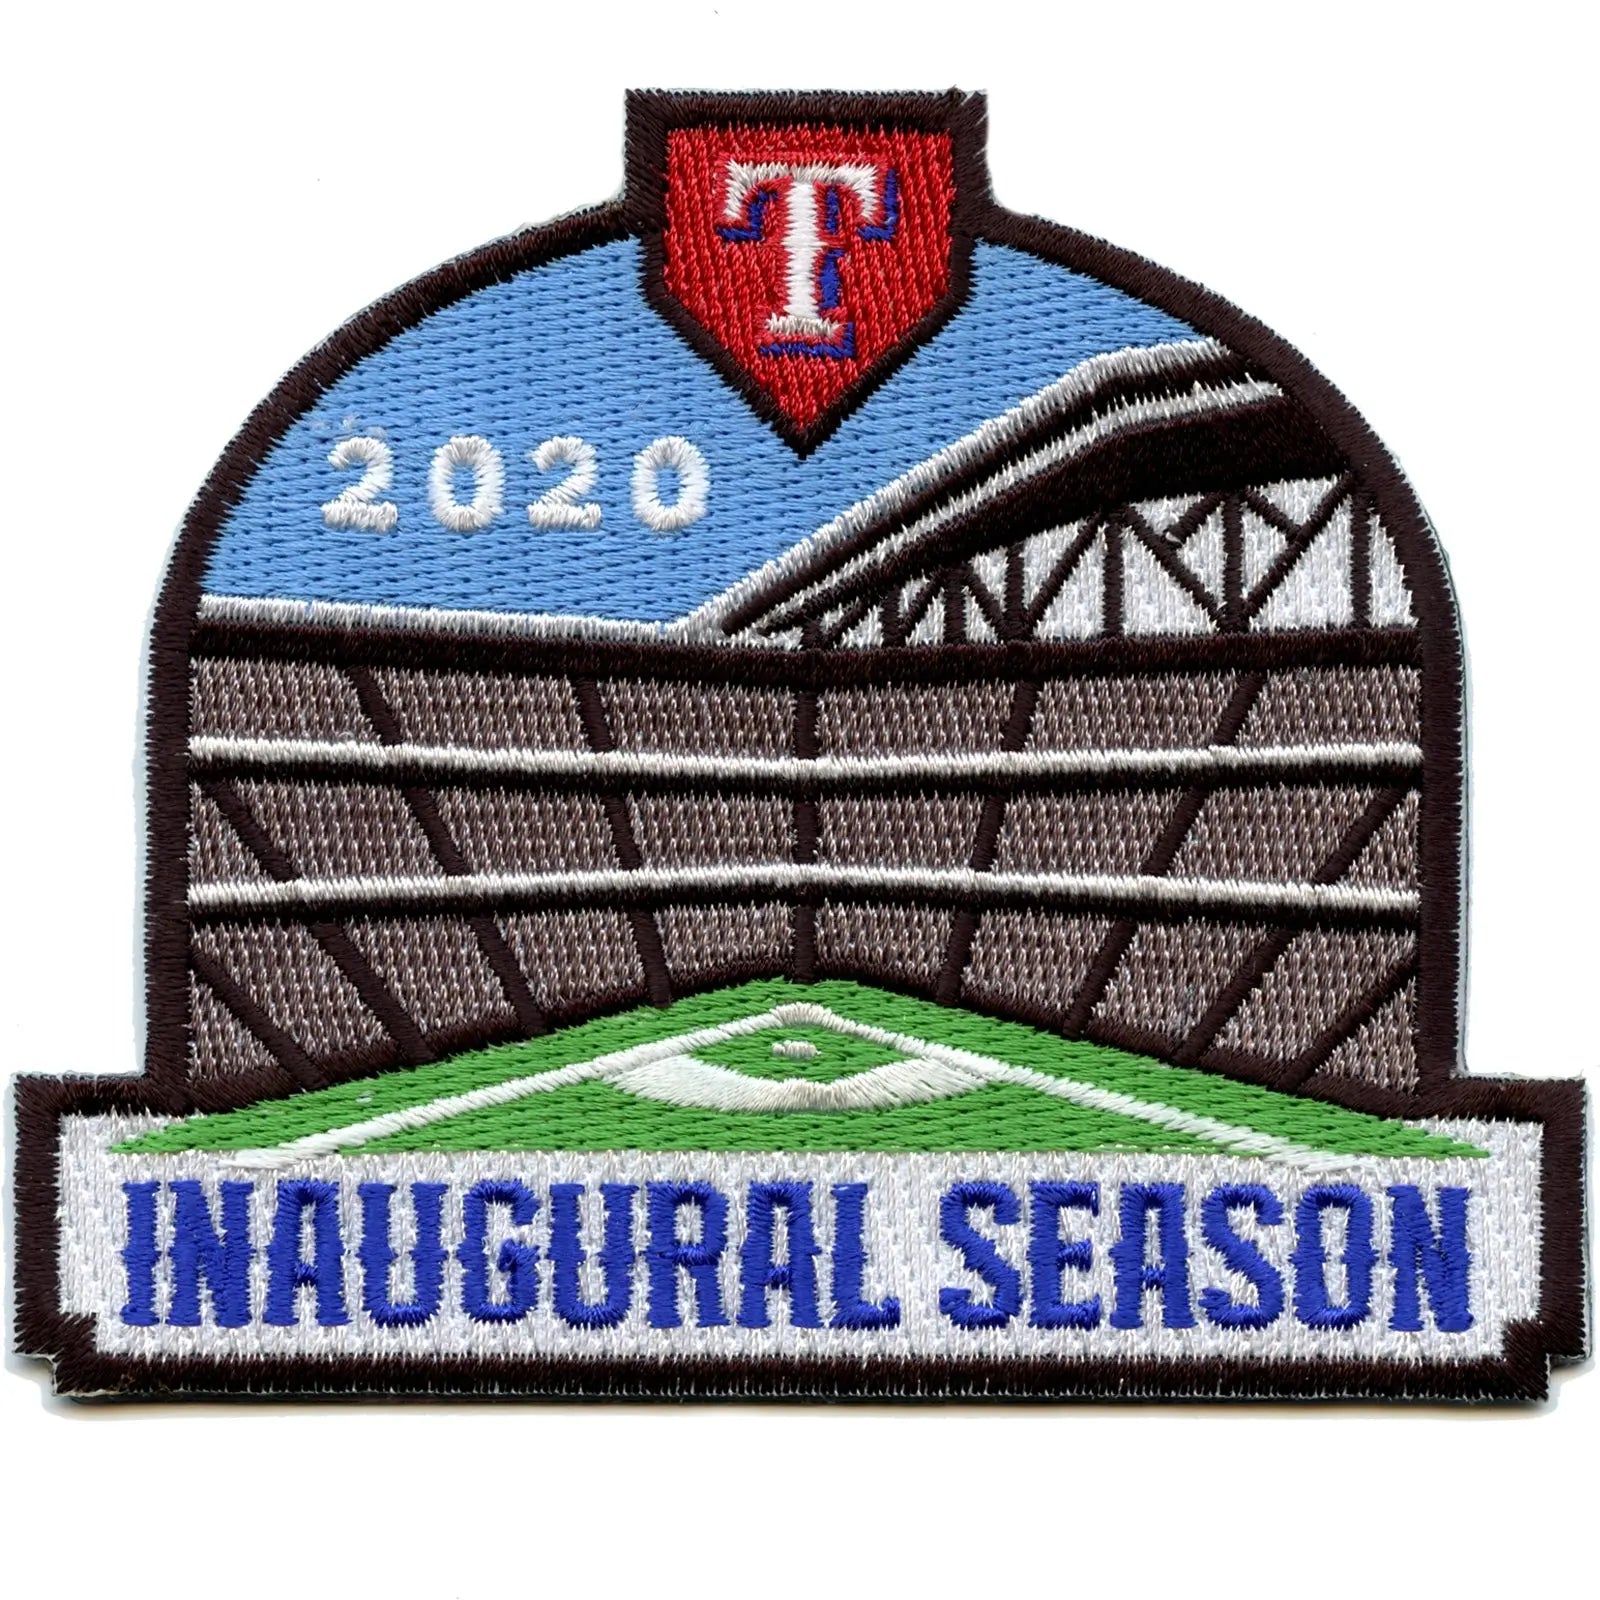 texas rangers jersey 2020